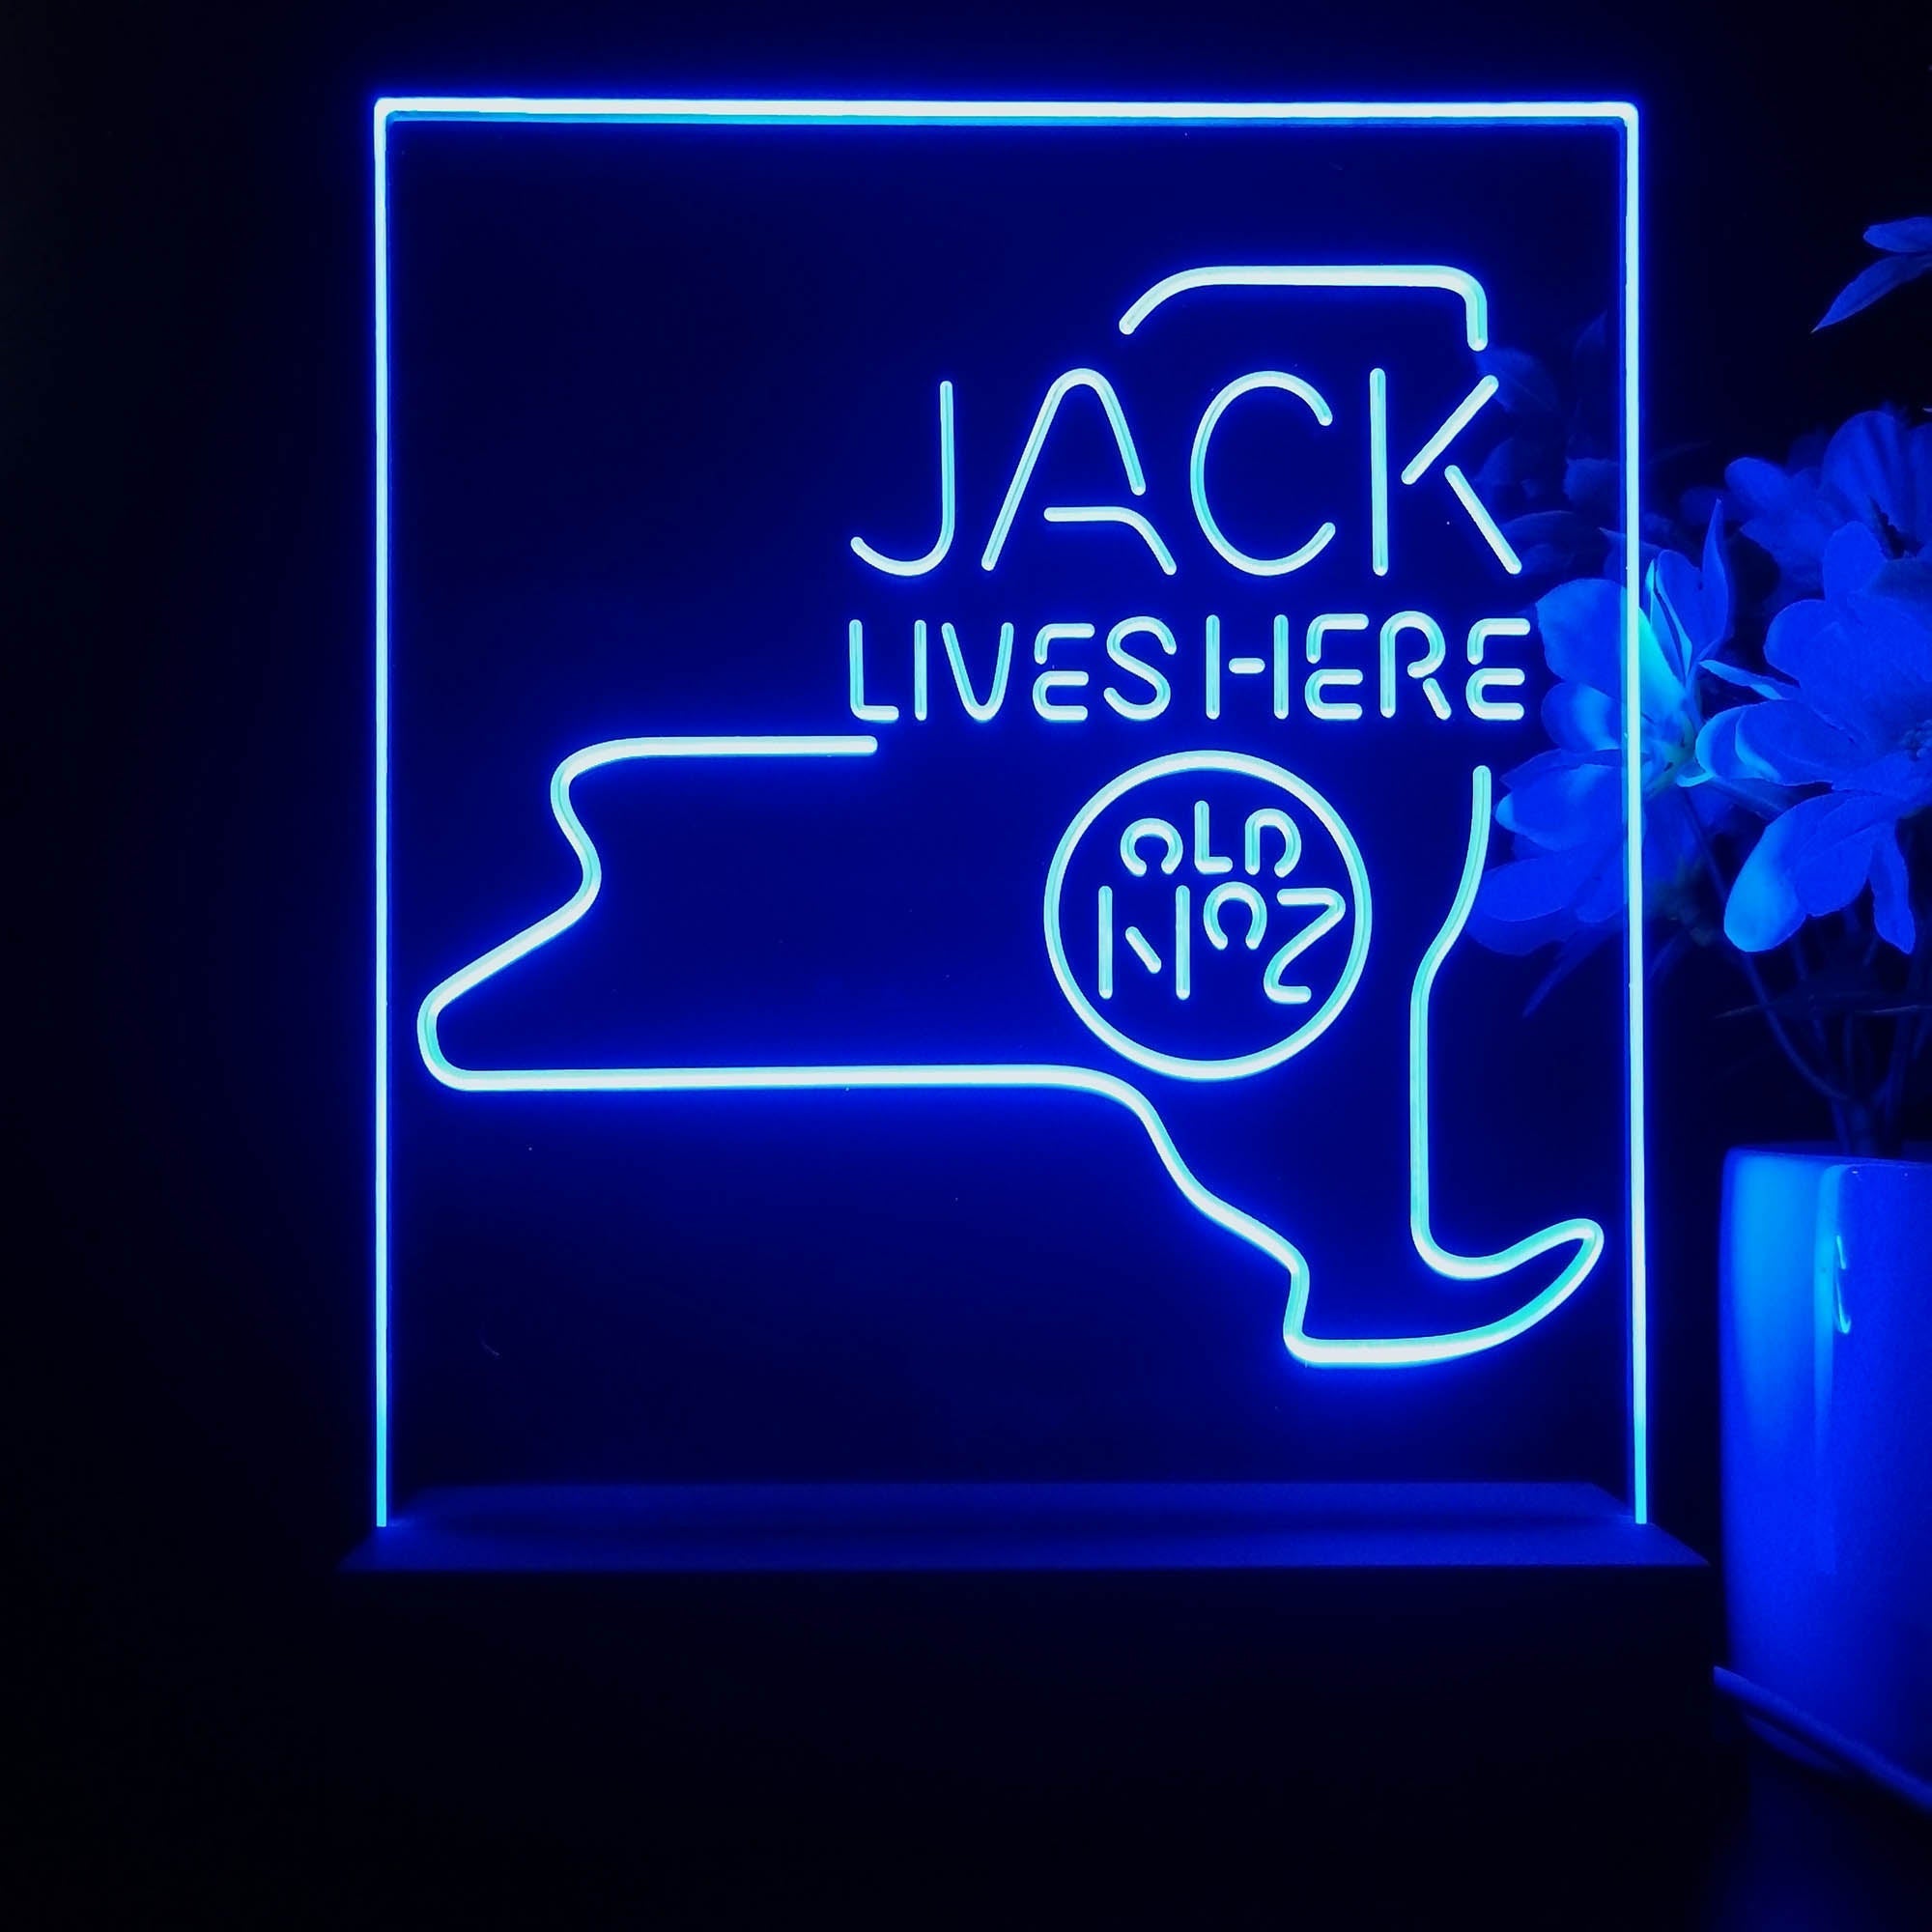 New York Jack Lives Here 3D Illusion Night Light Desk Lamp